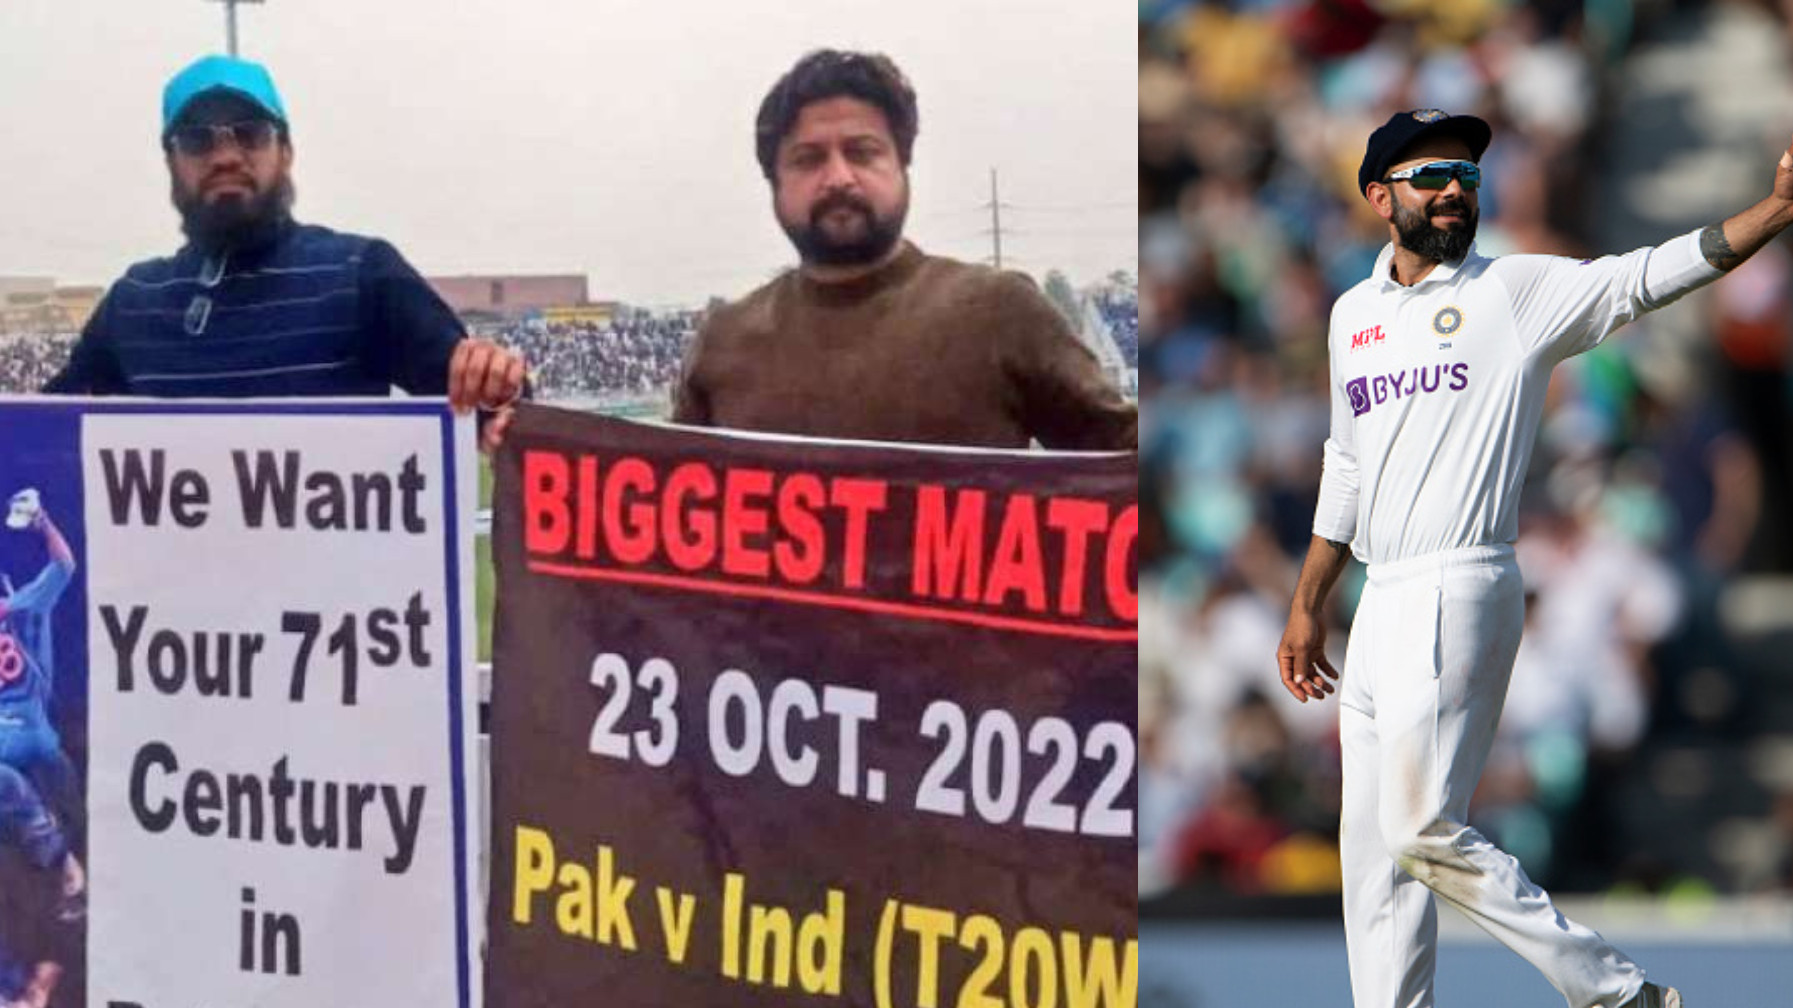 “Want your 71st century in Pakistan”- Pakistan fan requests Virat Kohli during Rawalpindi Test